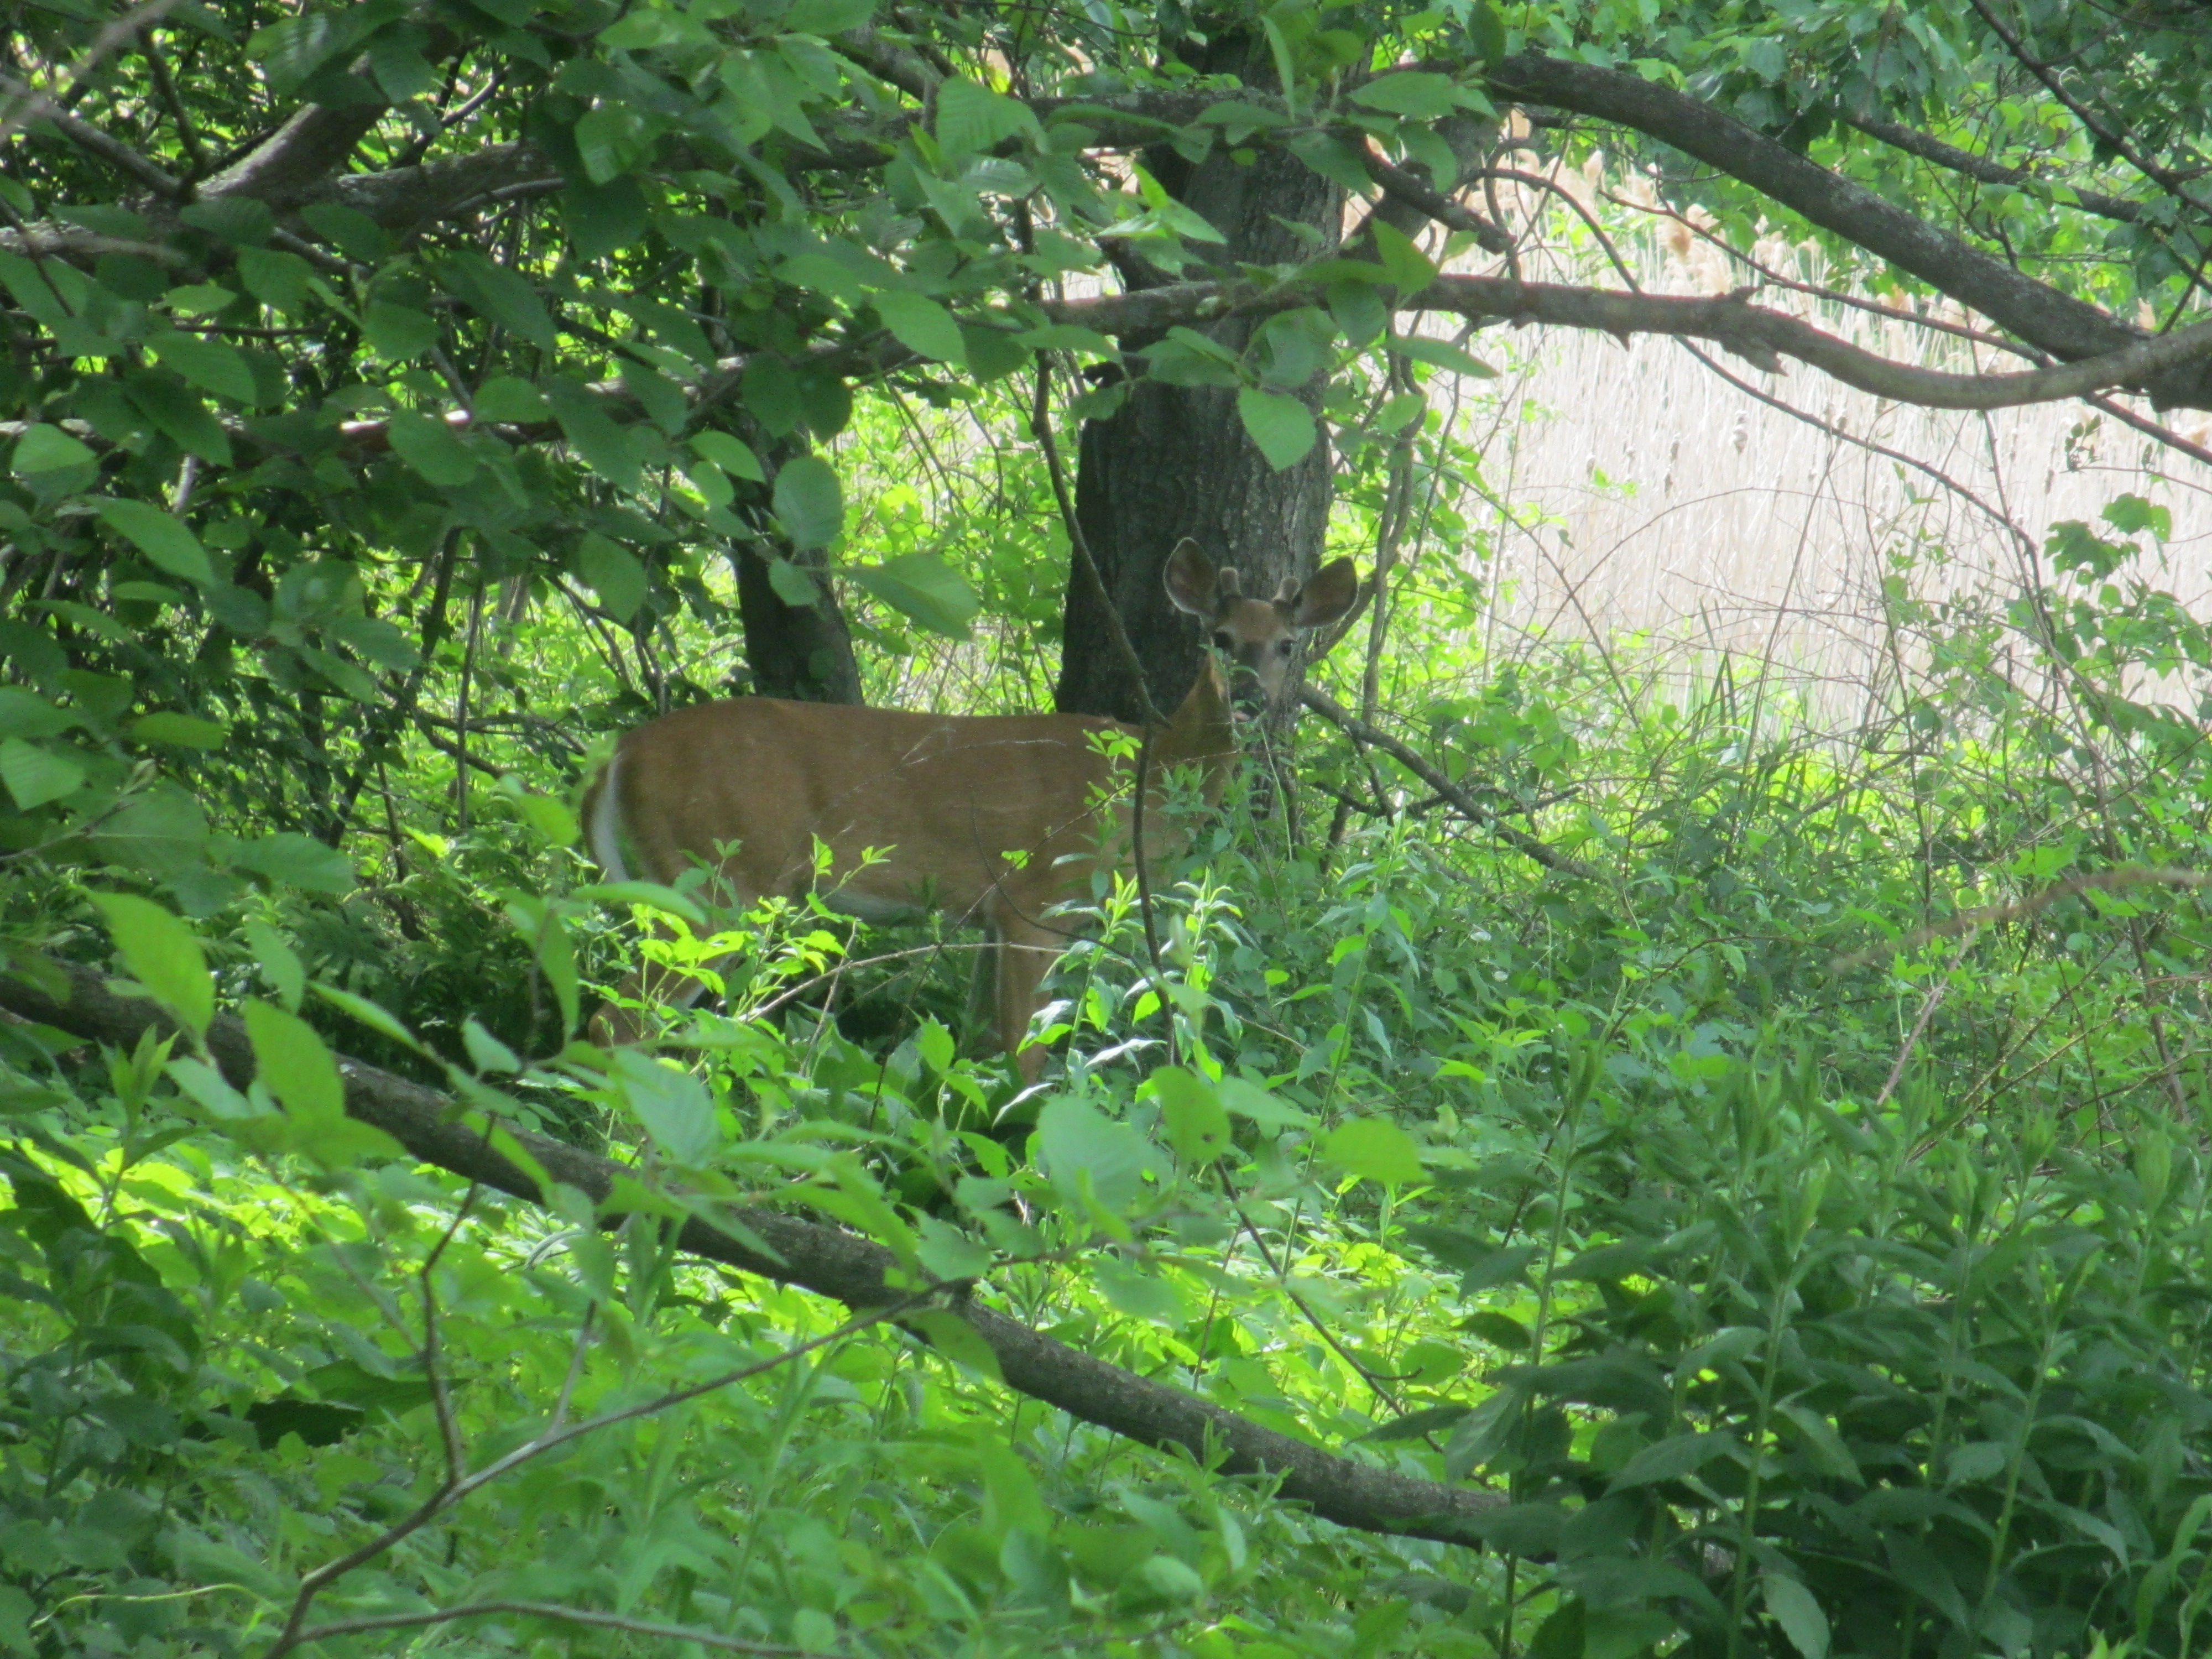 Deer in brush